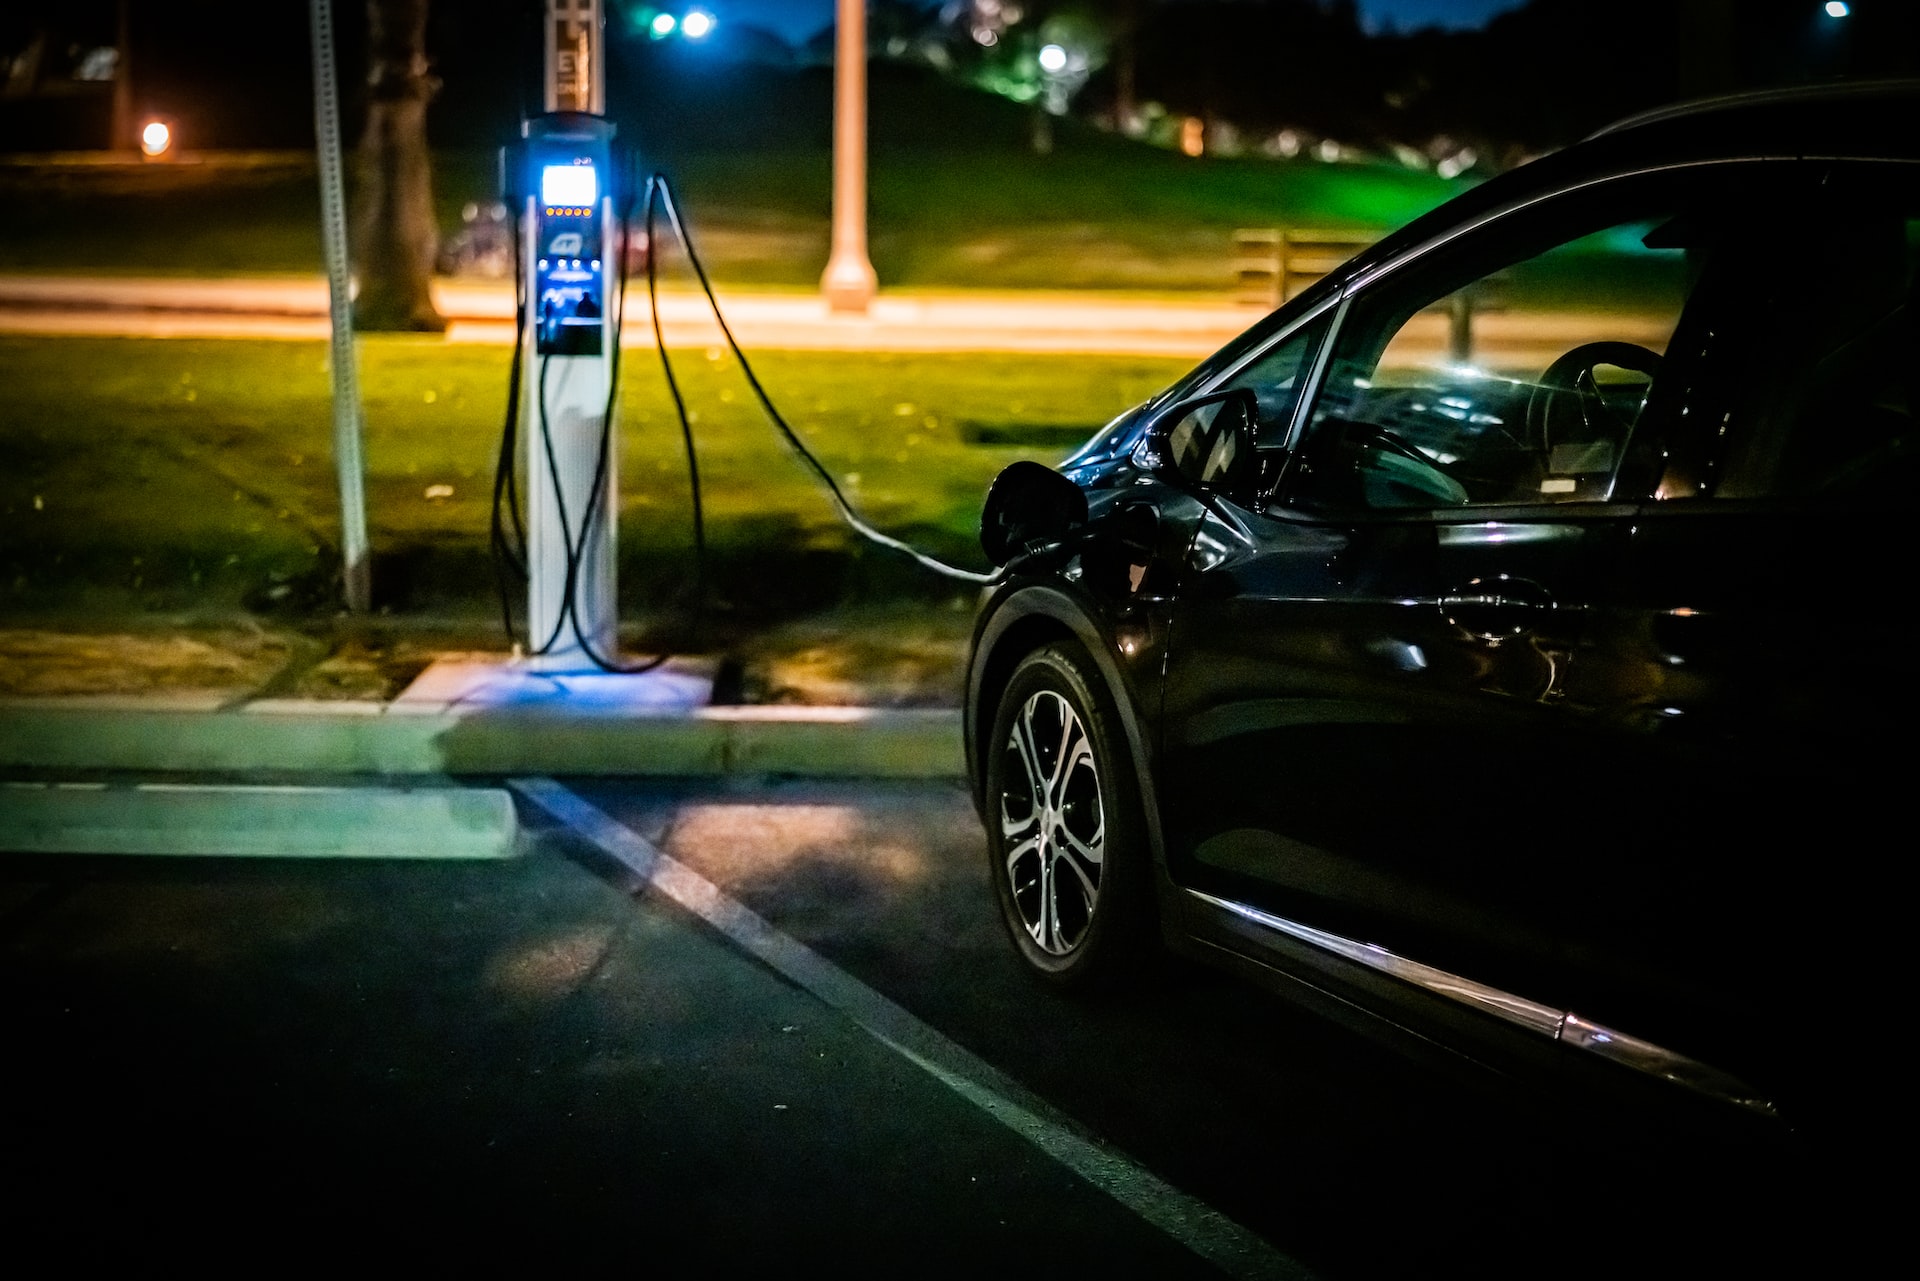 Electic car charging in public